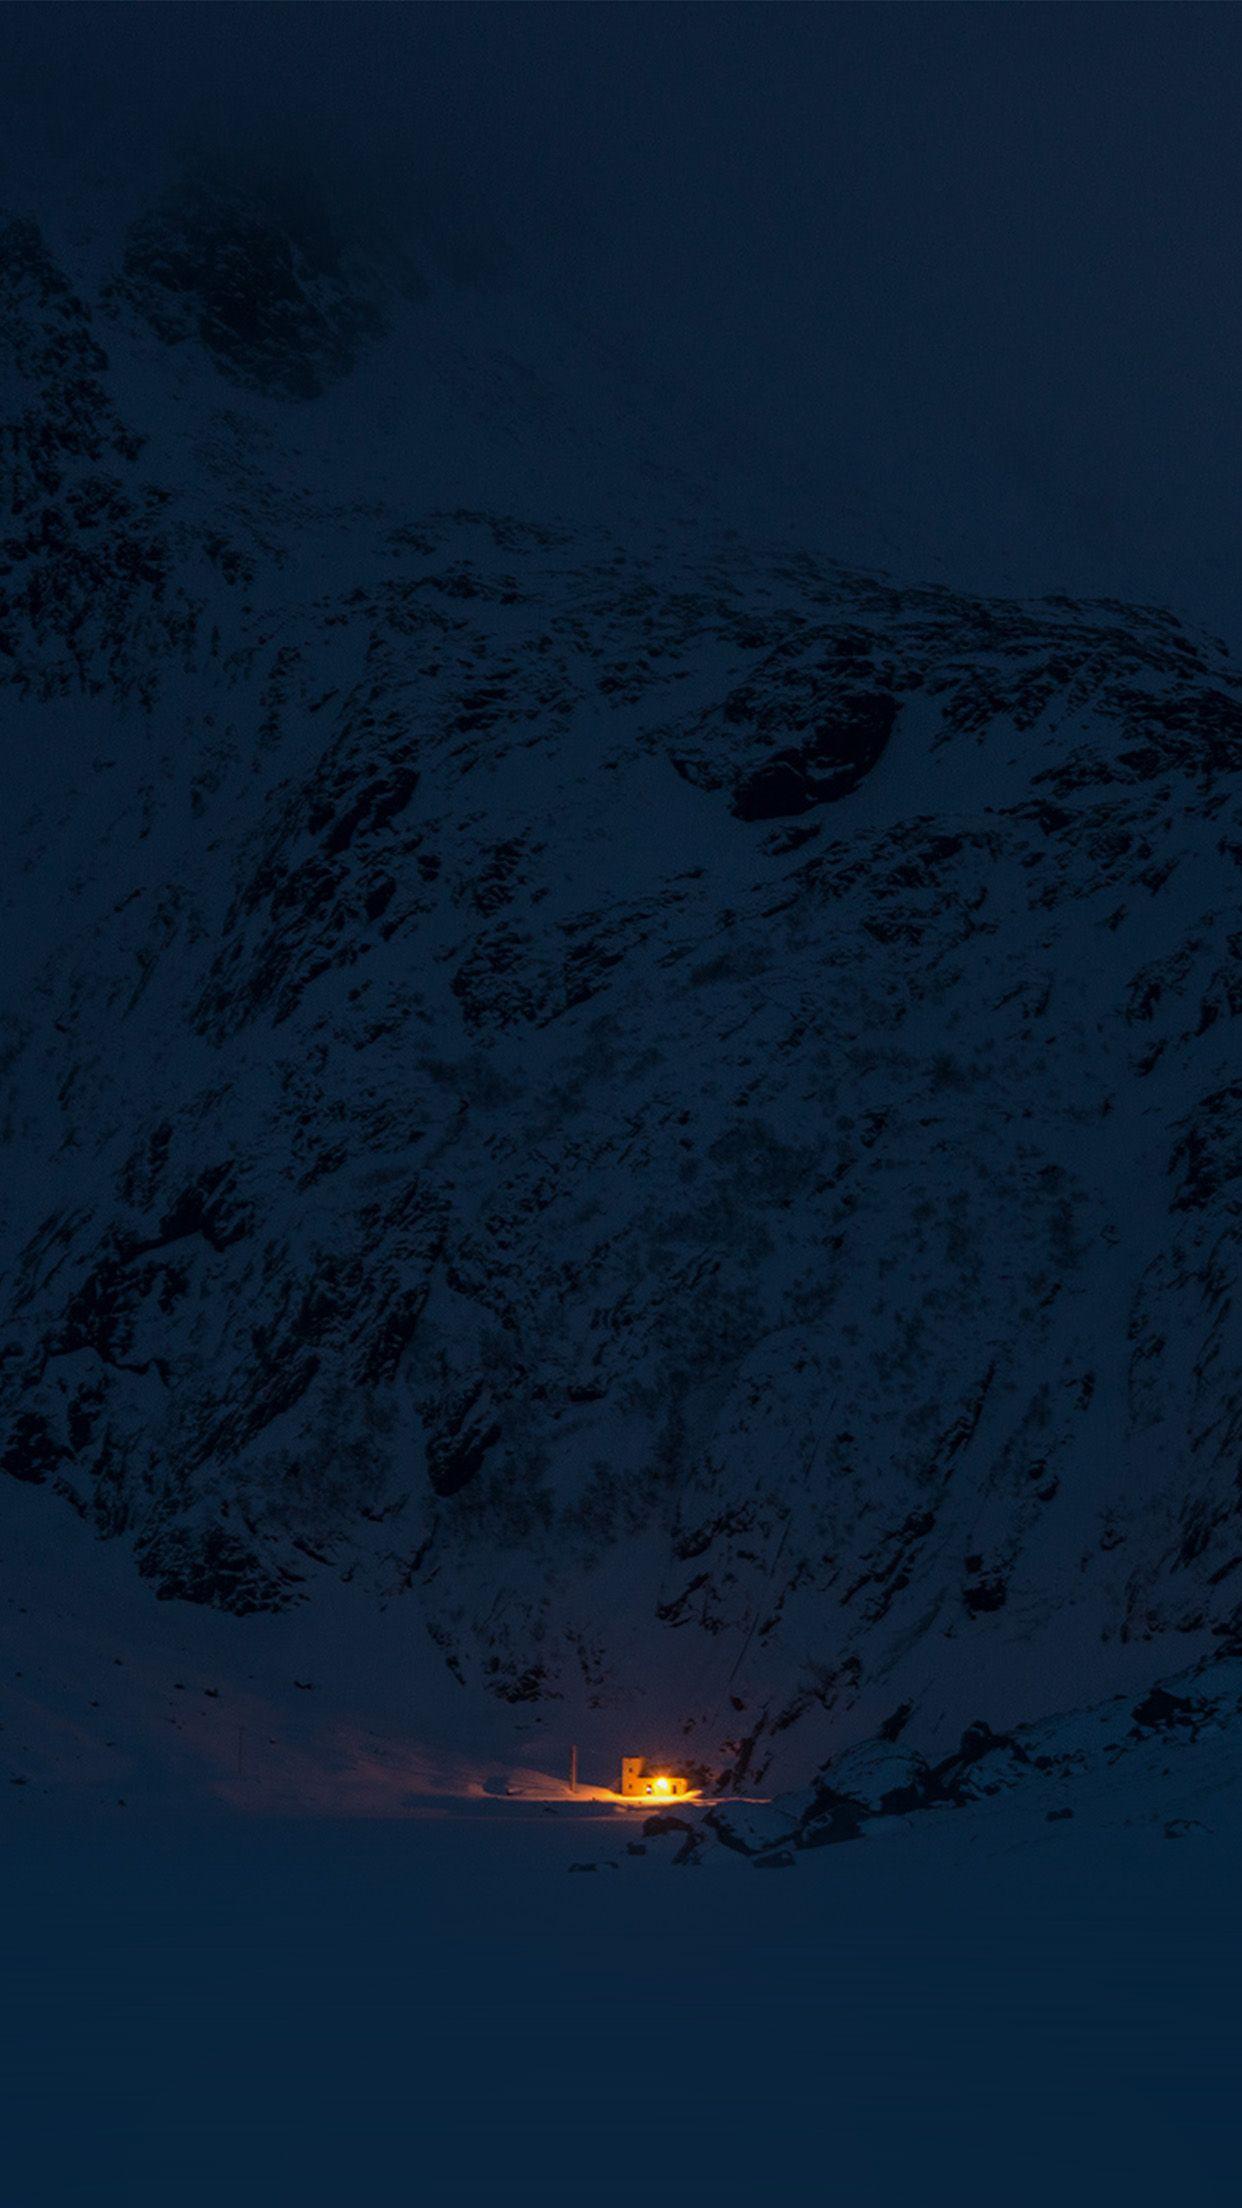 Snow Mountain Night Wallpapers - Top Free Snow Mountain Night